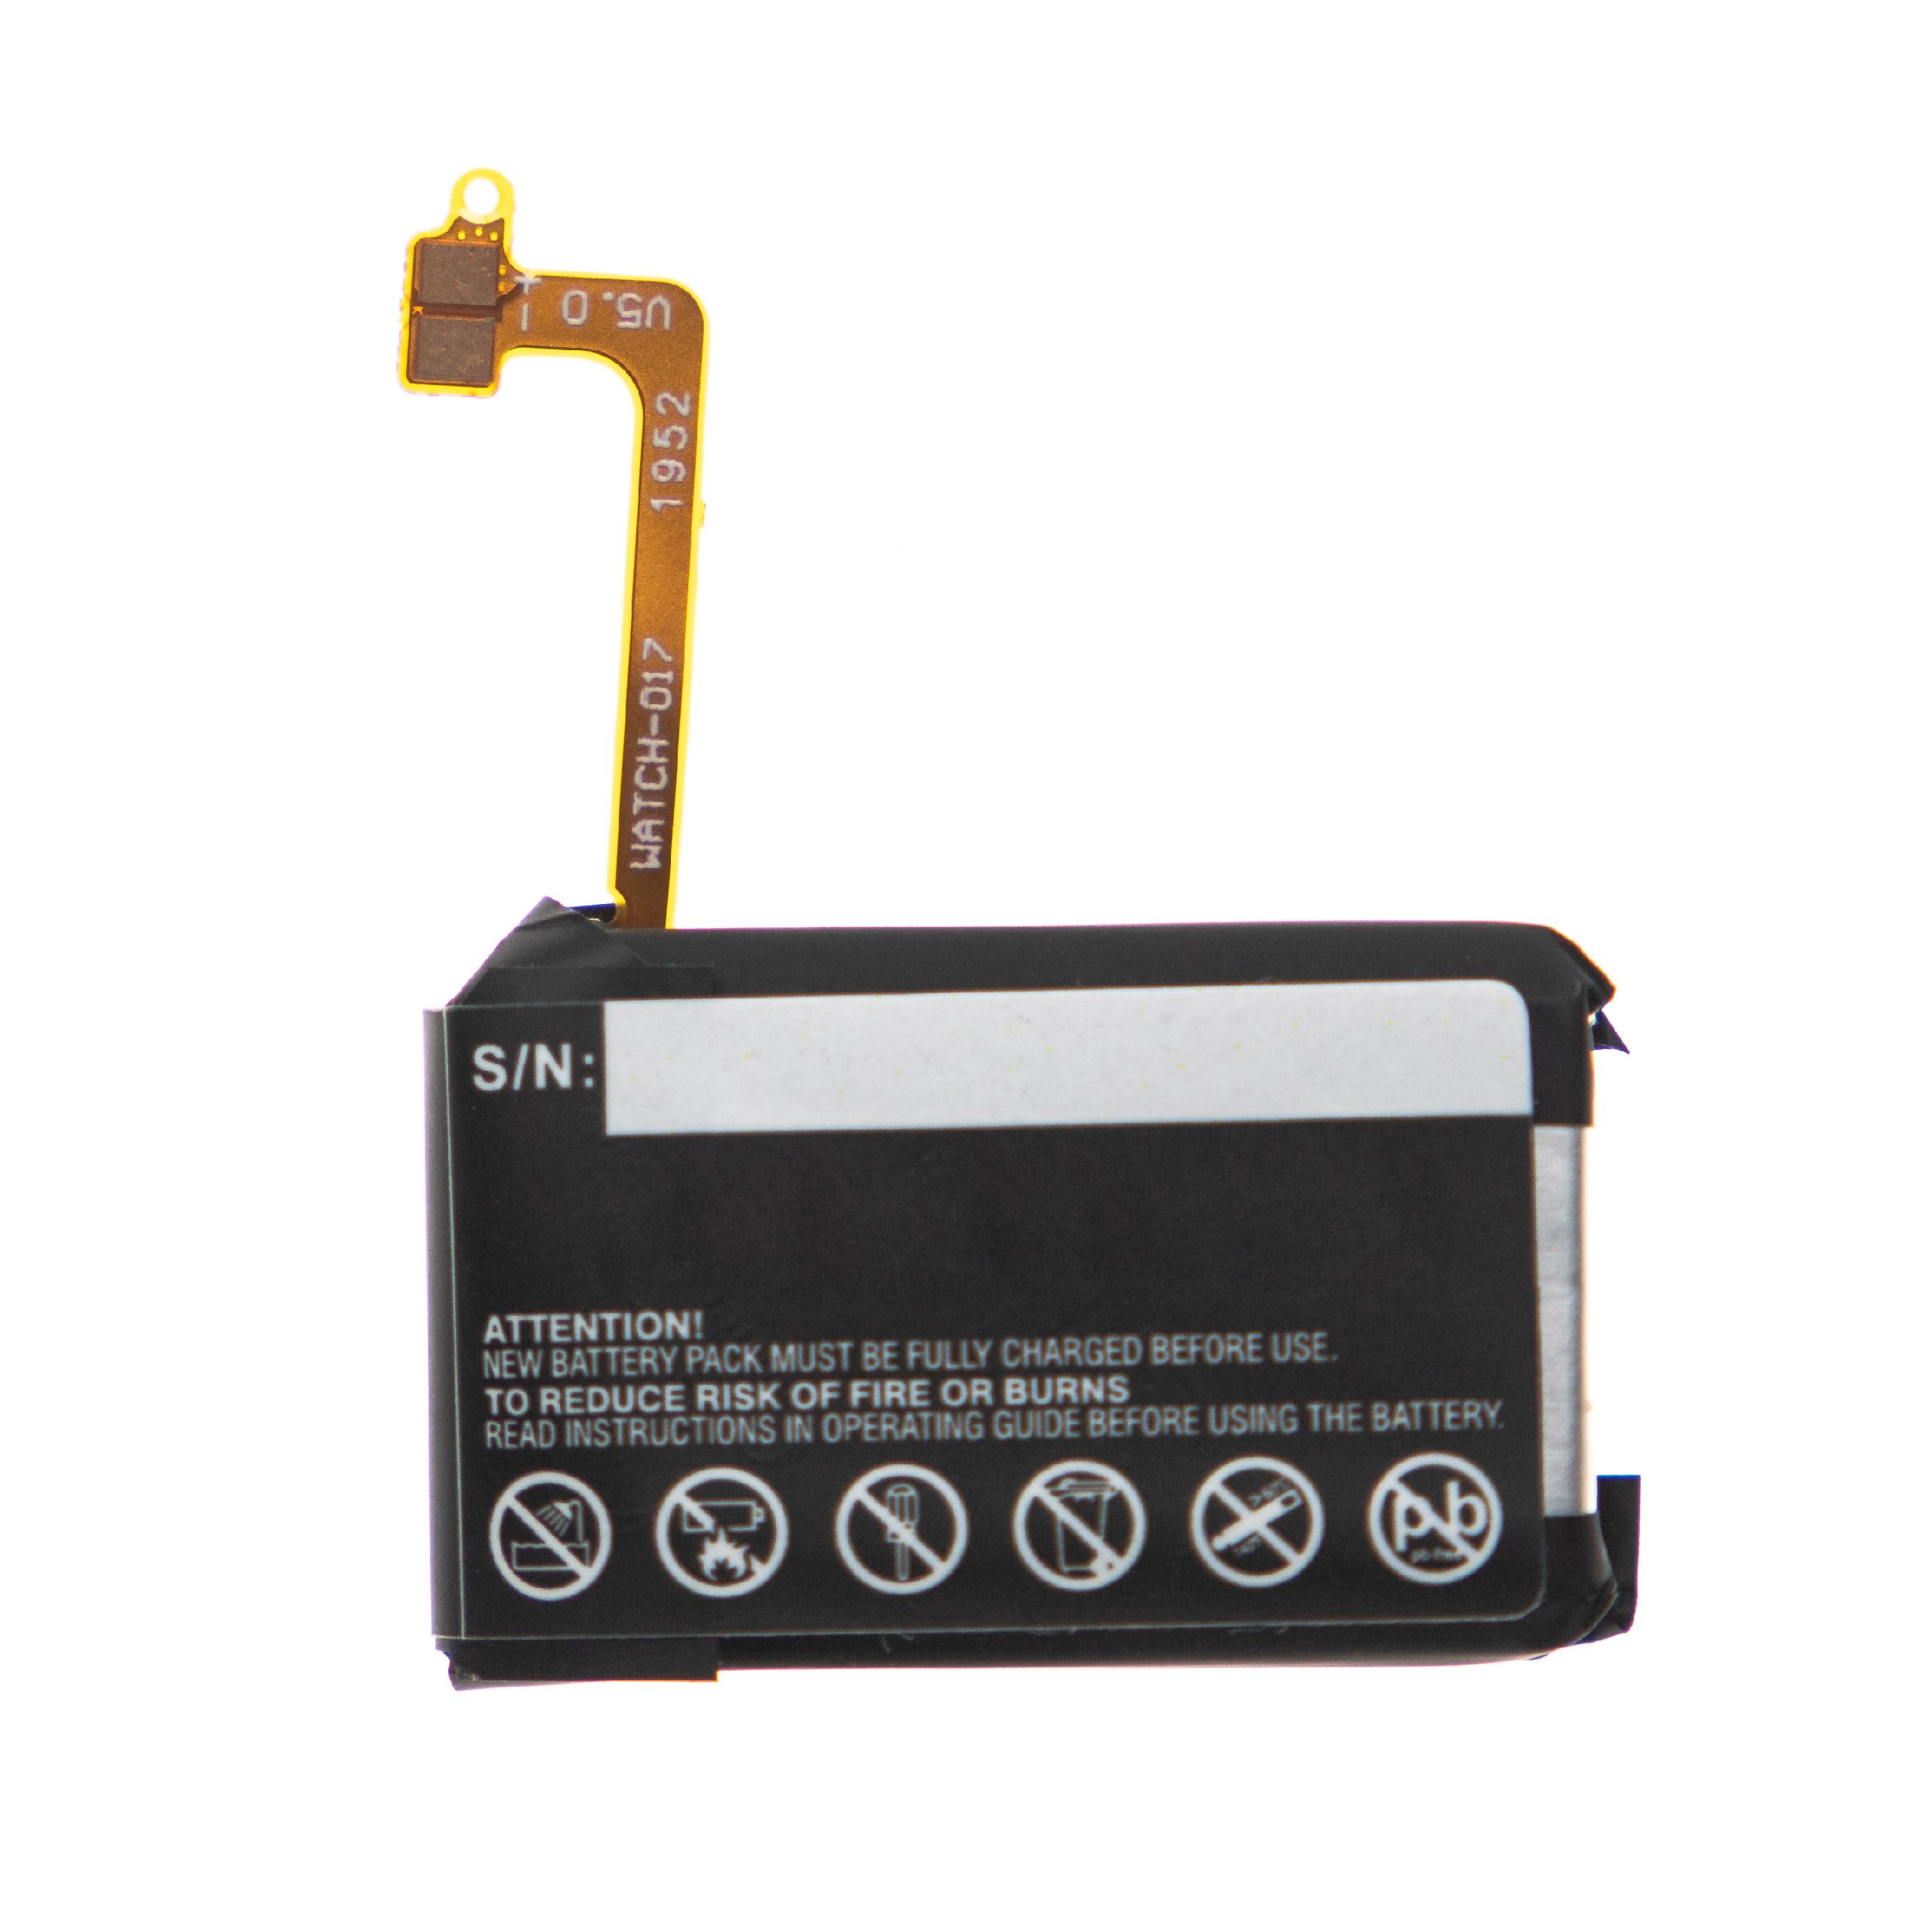 Smartwatch Battery Replacement for Samsung EB-BR730ABE, GH43-04538B - 300mAh 3.7V Li-polymer